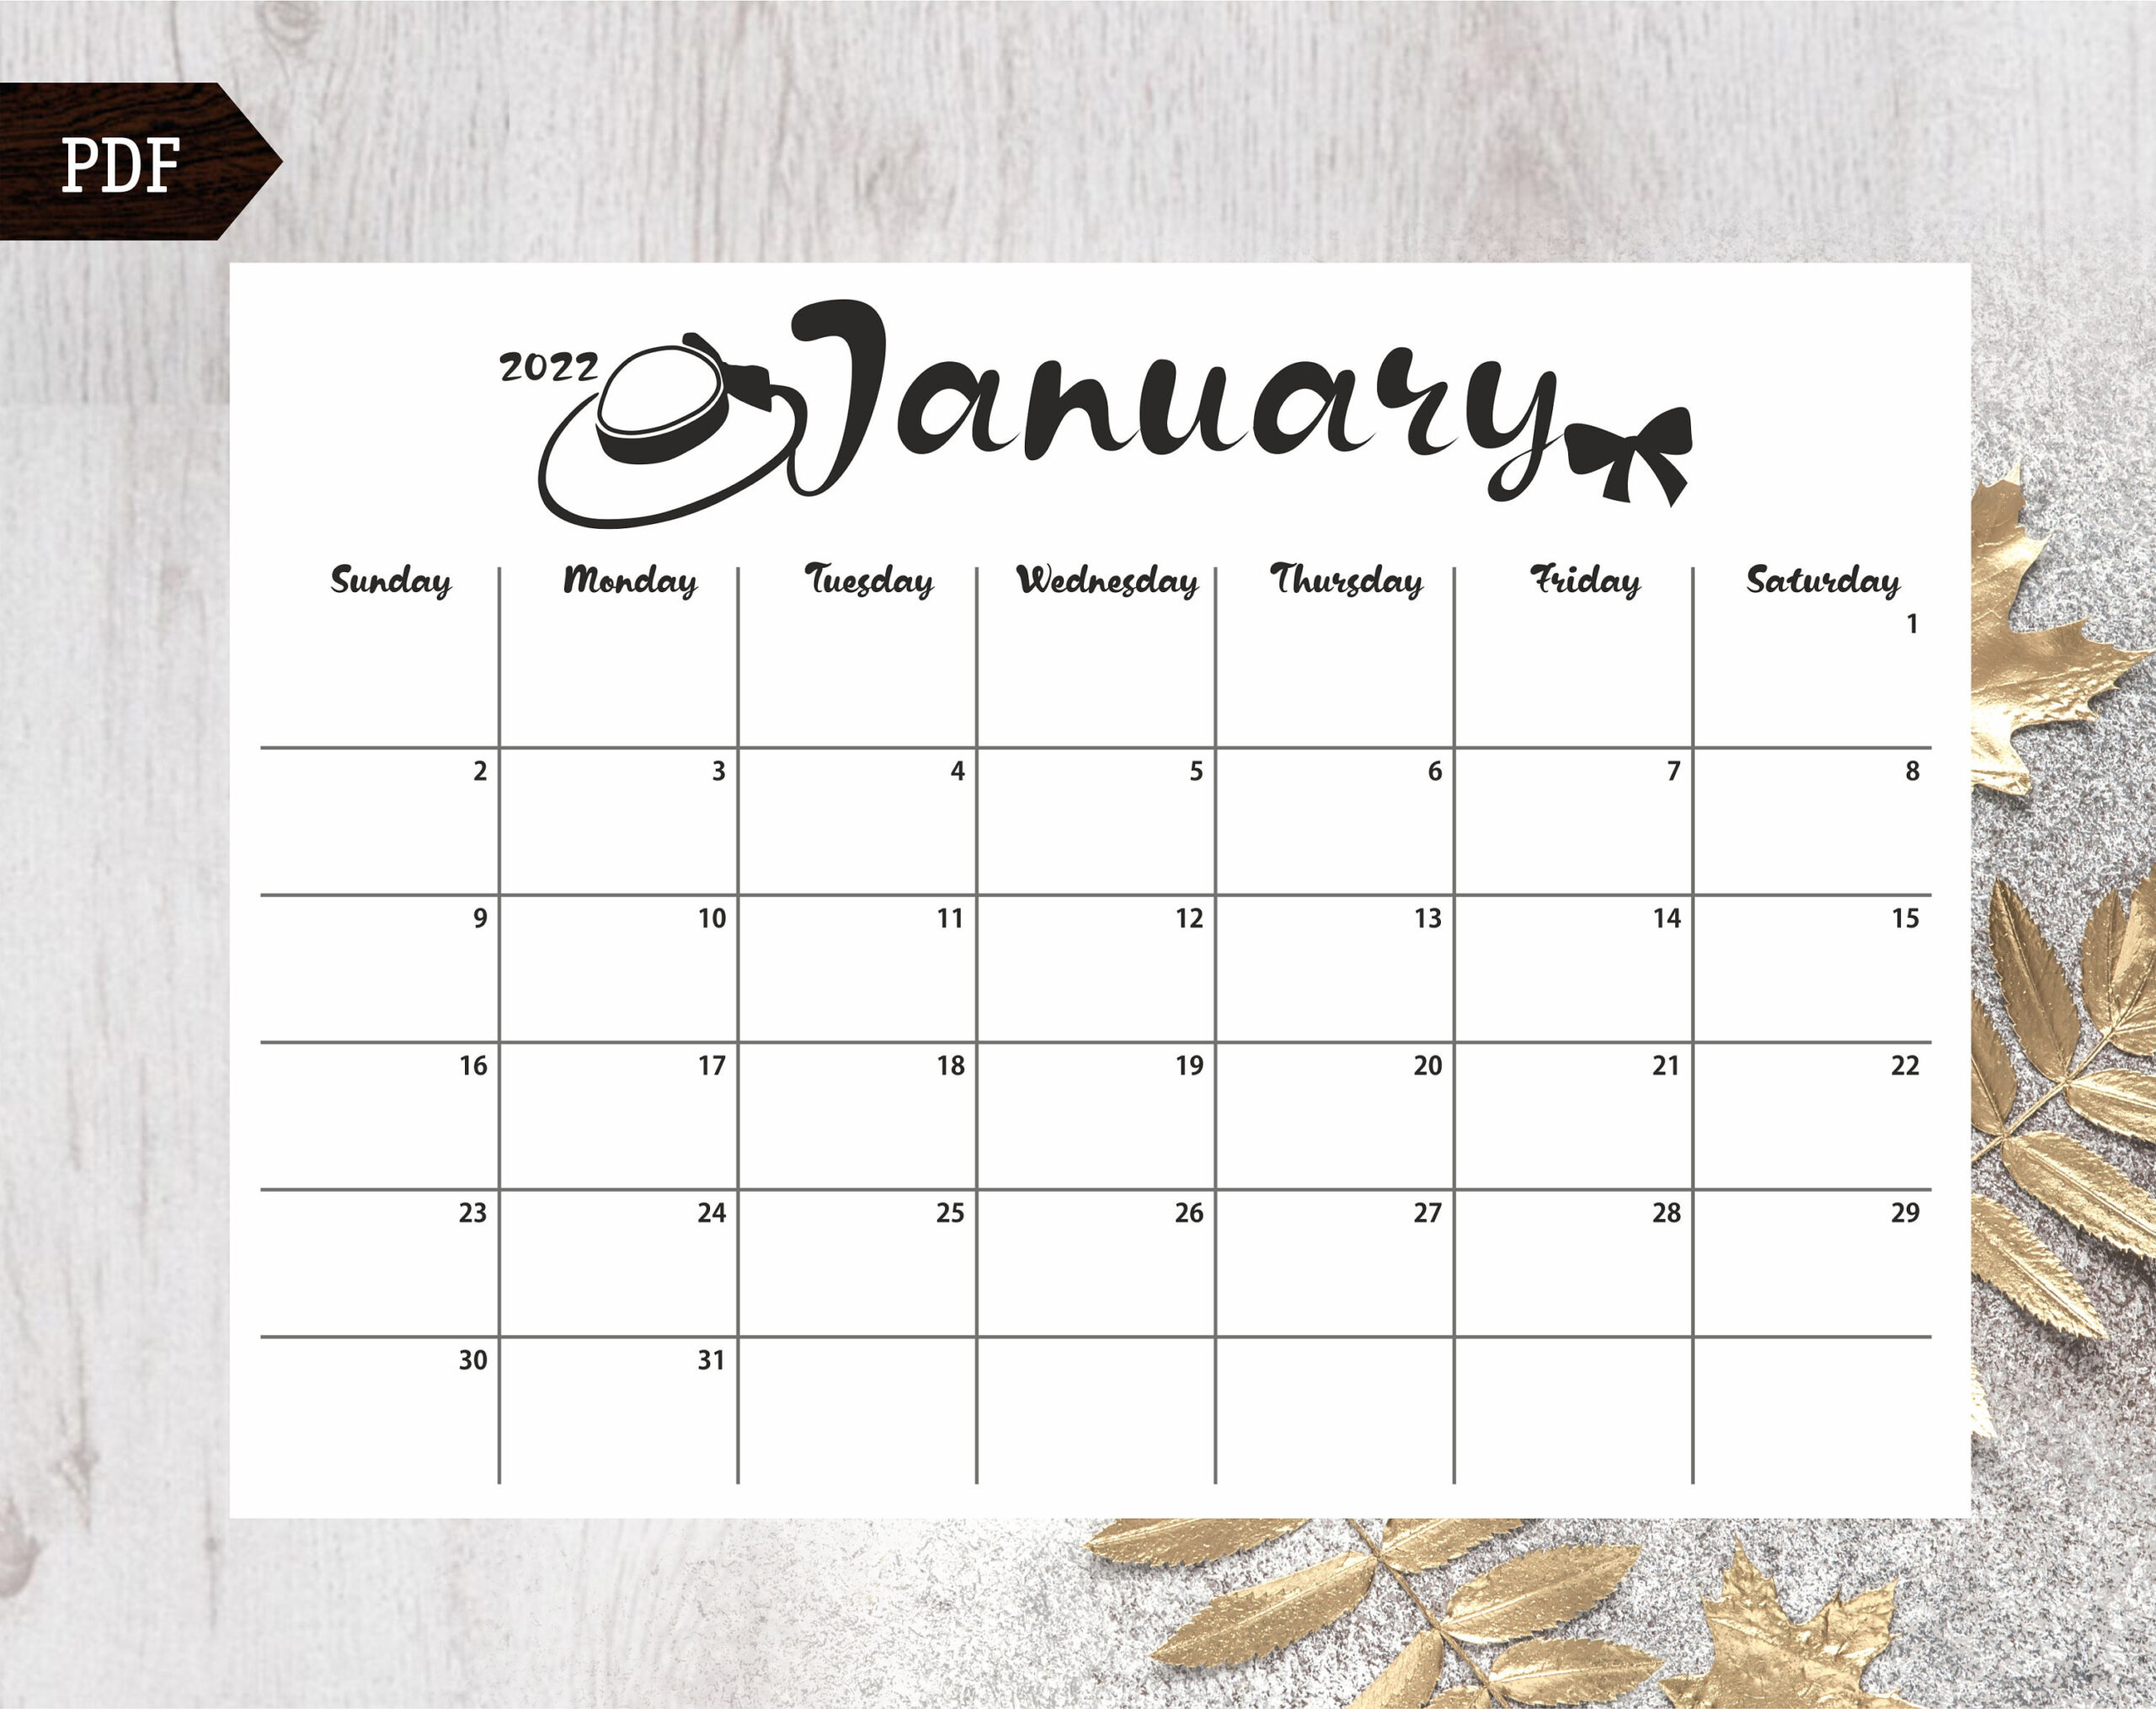 2022 White Calendar Wall Calendar Yearly Pdf Wall Calendar  Calendar 2022 Online Free